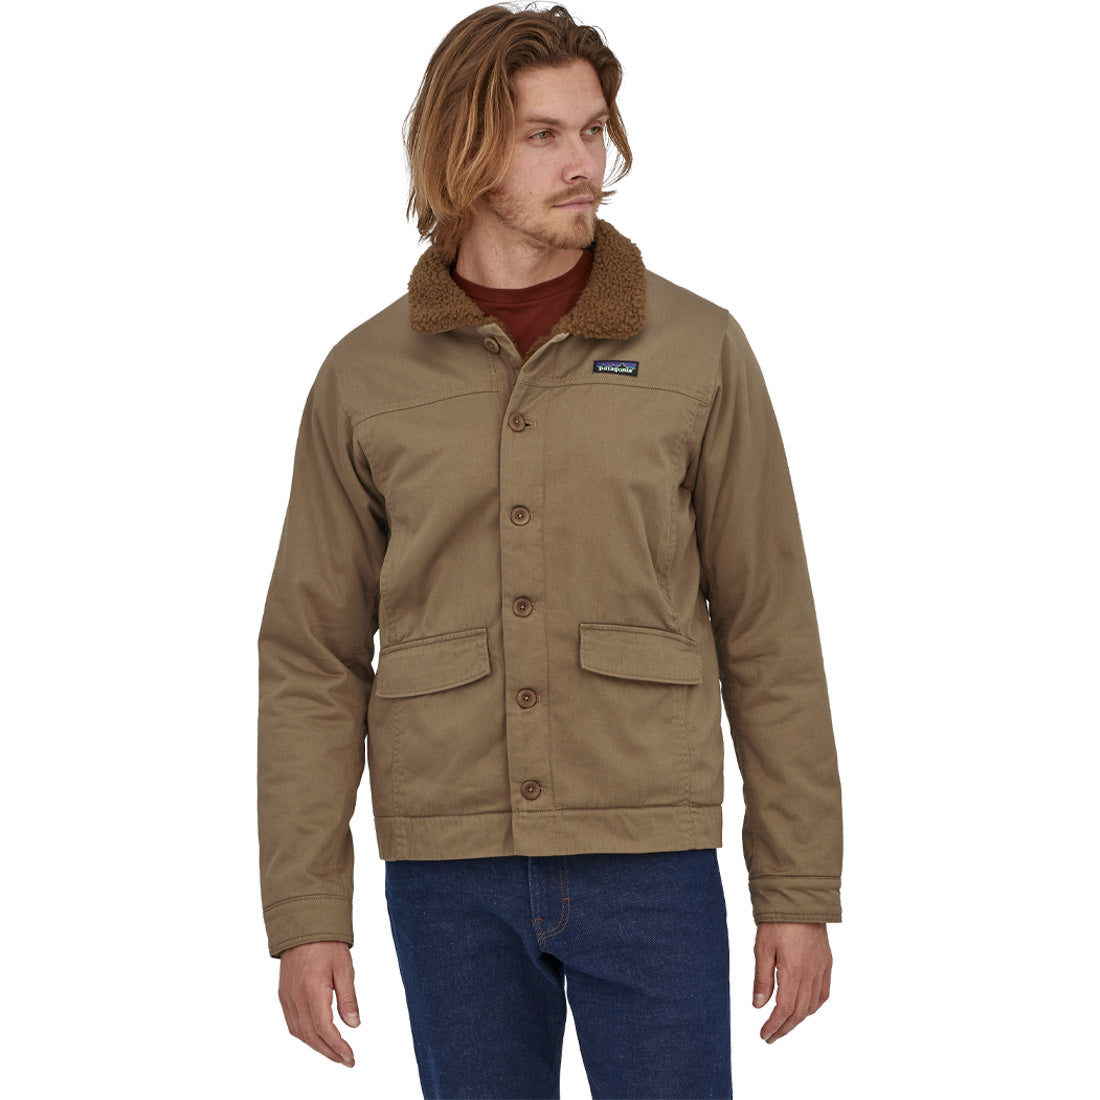 Patagonia Maple Grove Deck Jacket - Men's